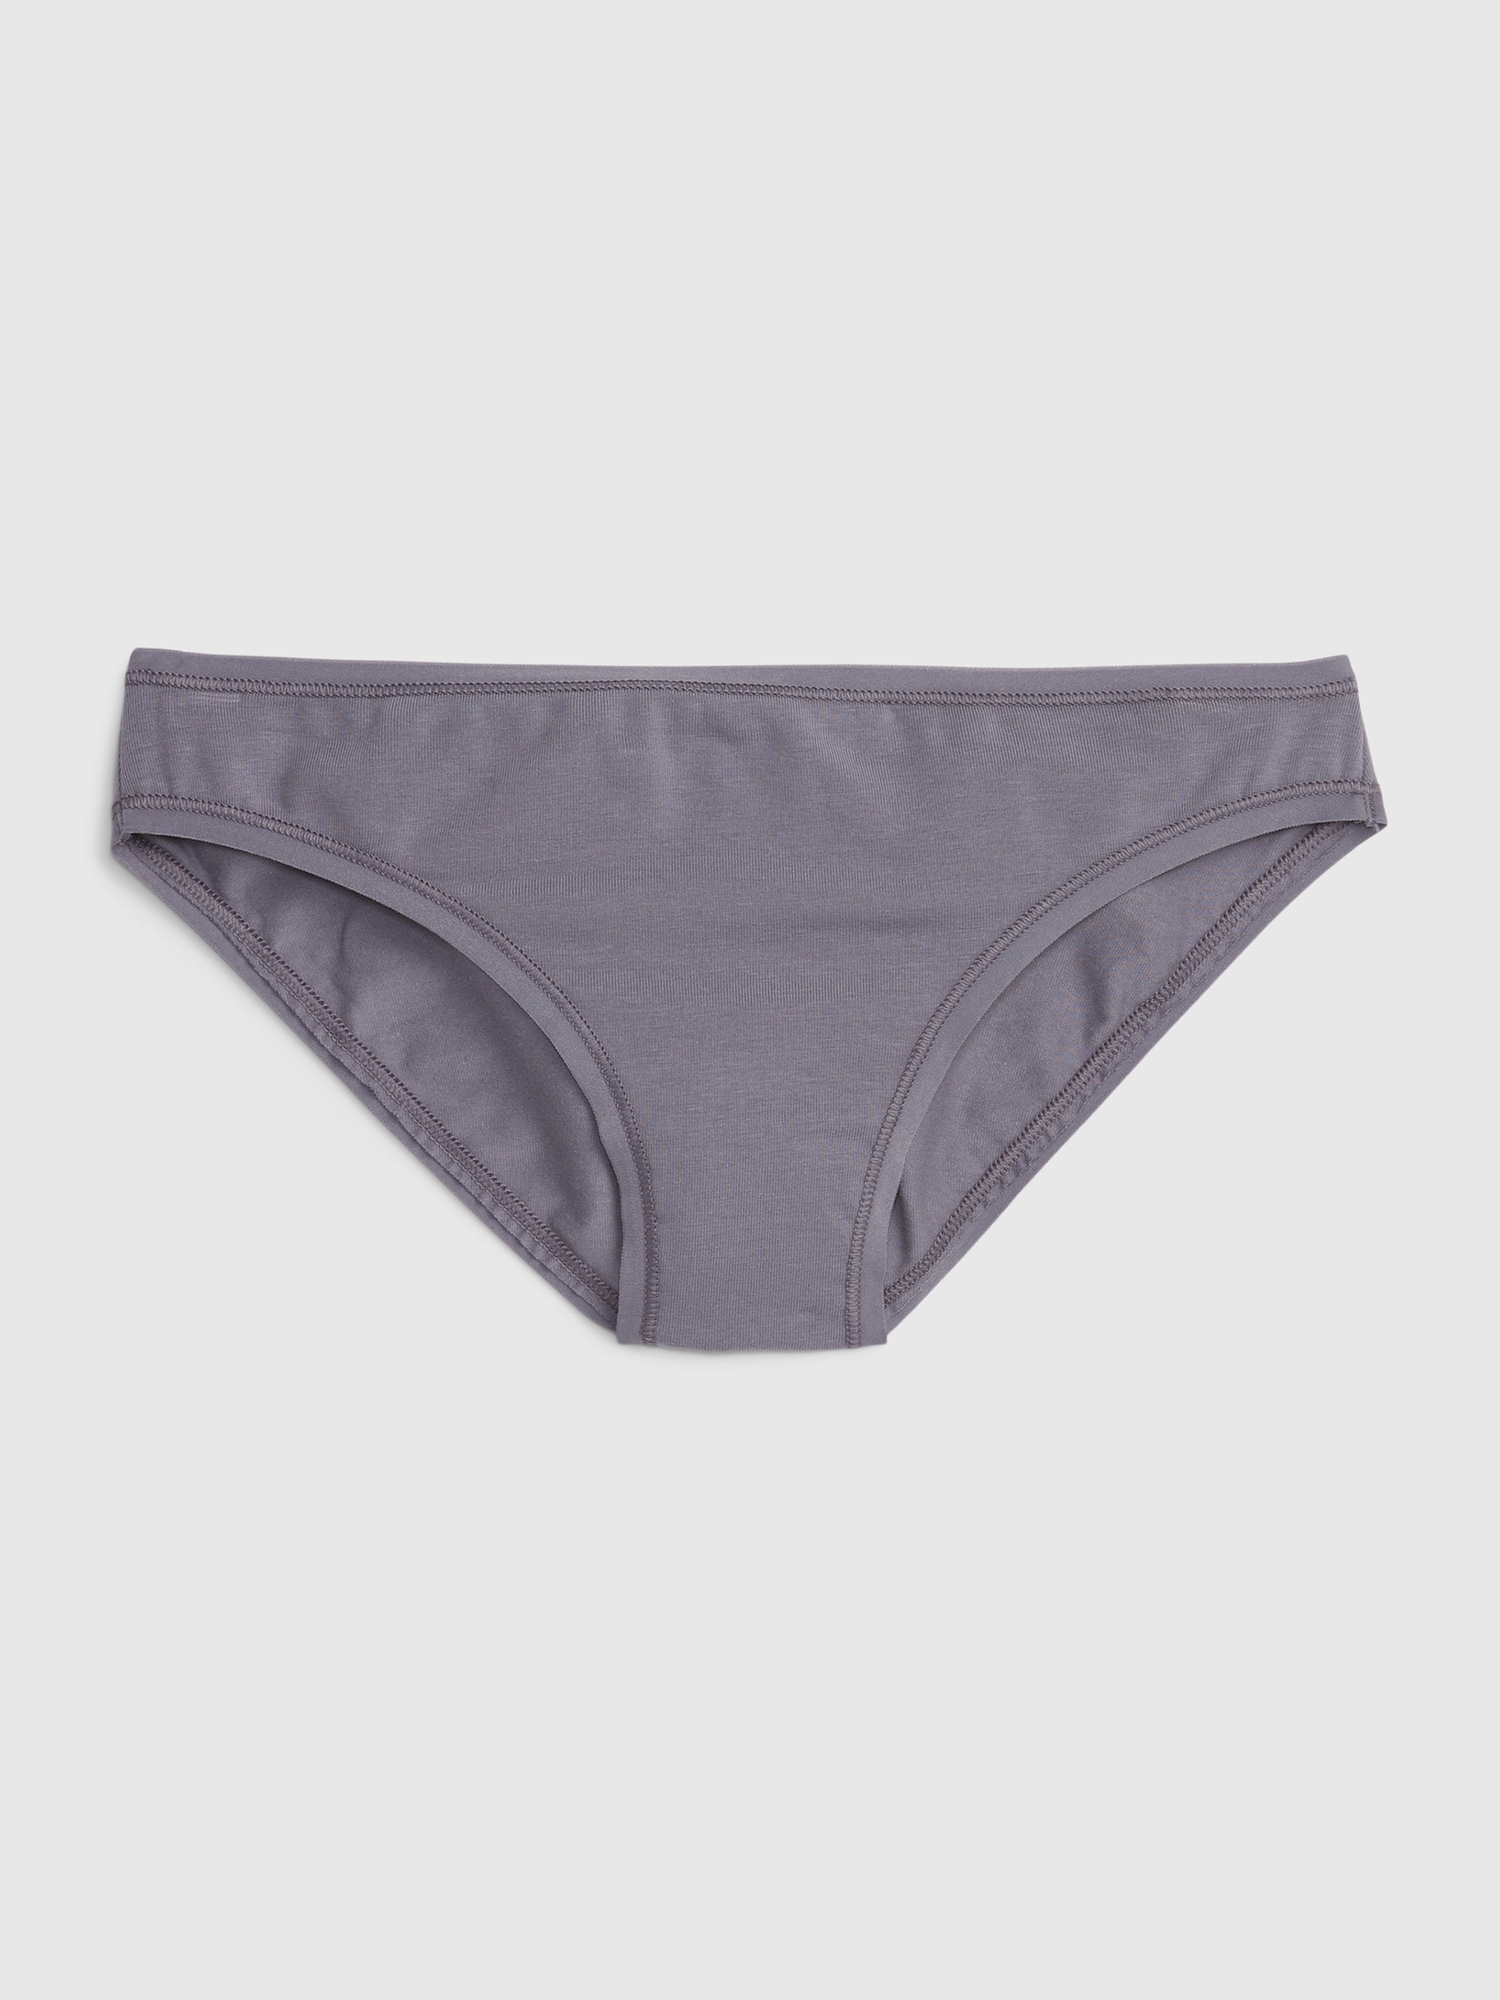 Gap Low Rise Bikini gray. 1